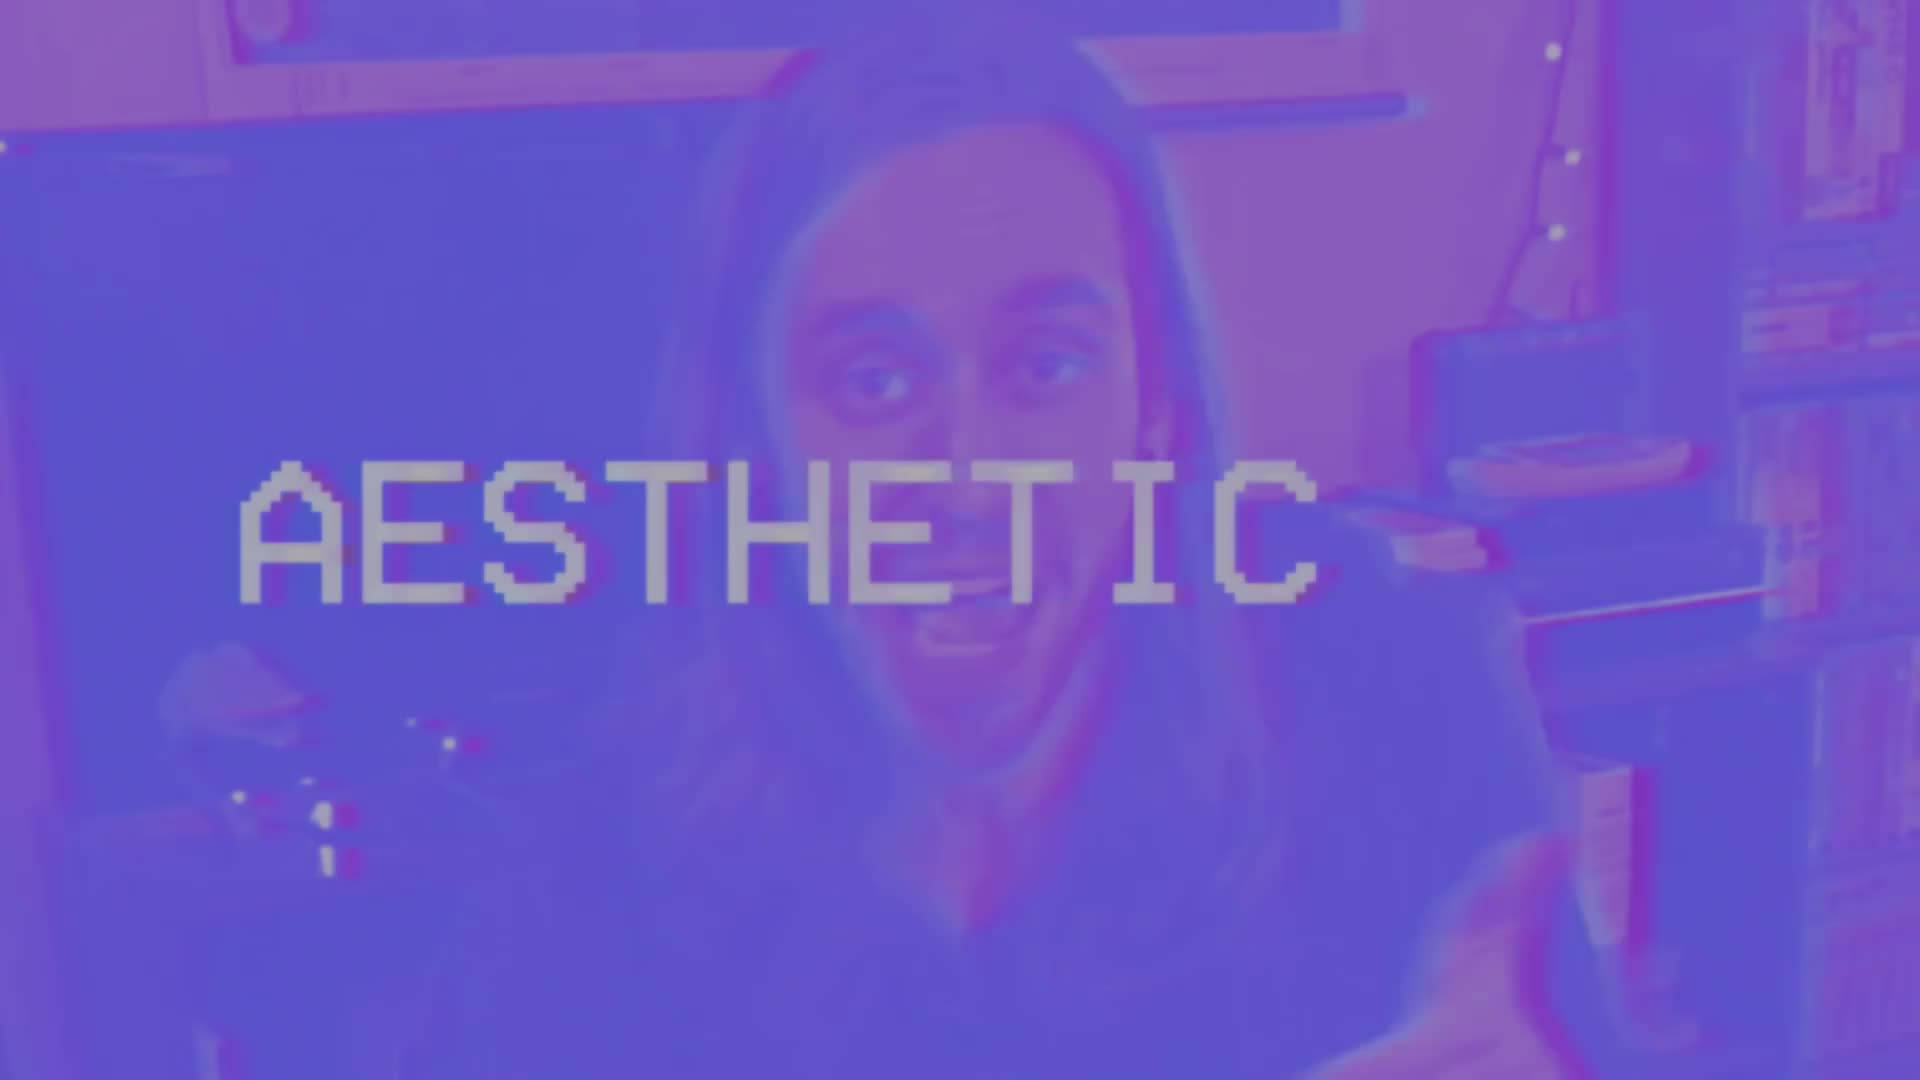 Aesthetic Retro Vhs Video Wallpaper